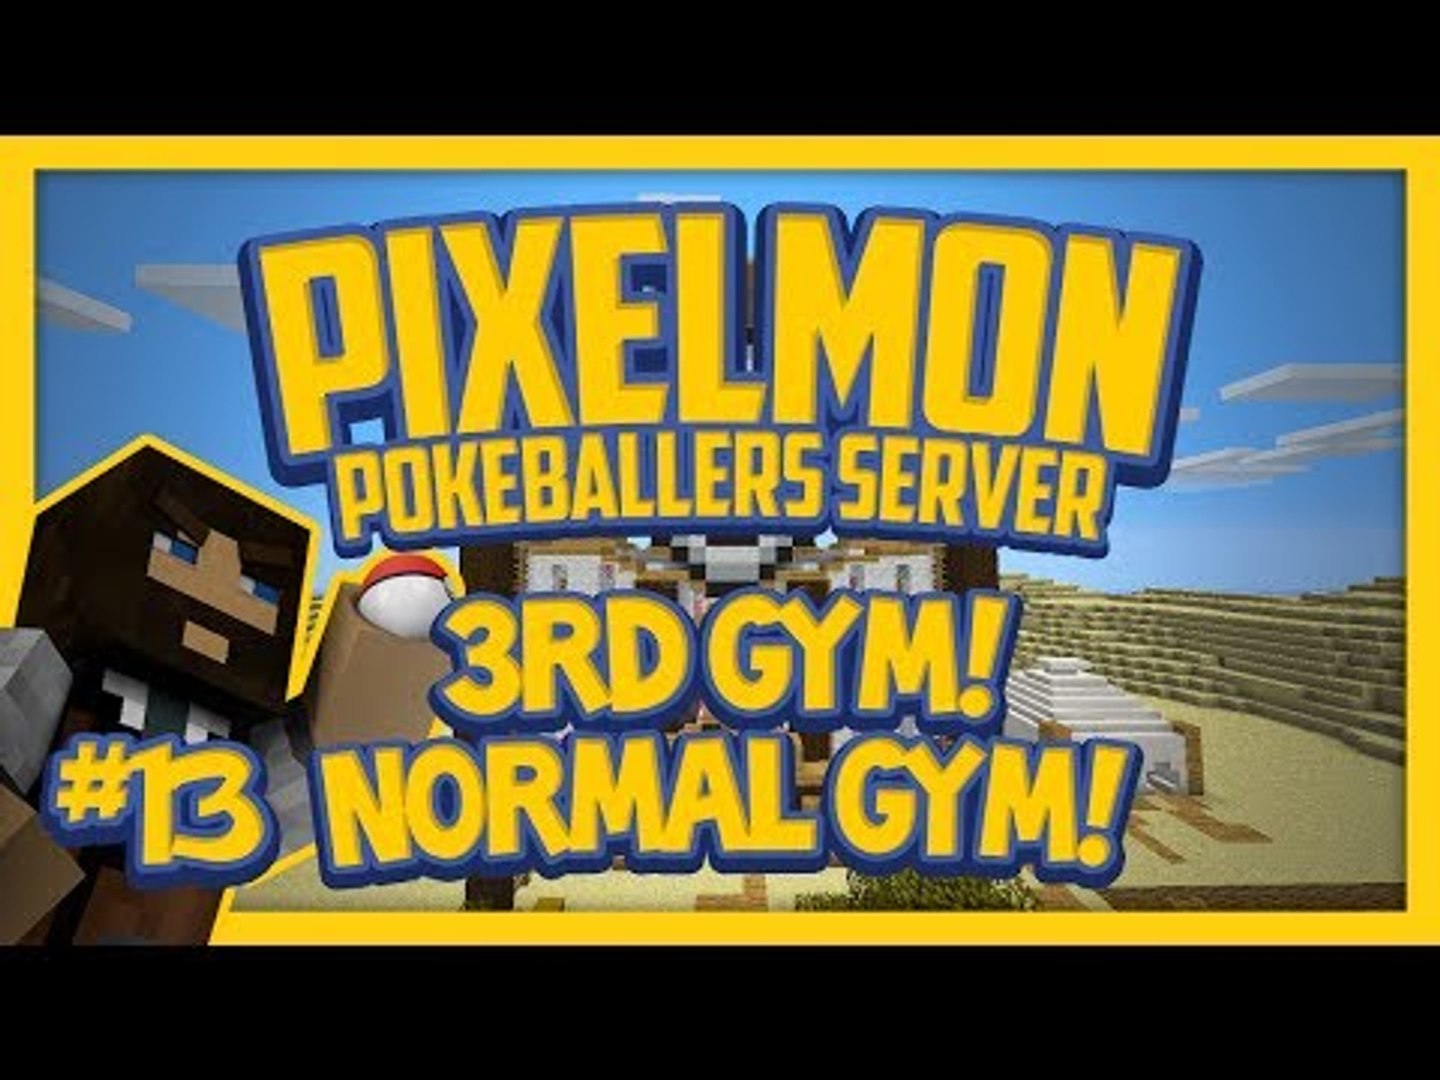 Pixelmon Server (Minecraft Pokemon Mod) Pokeballers Lets Play Season 2  Ep.13 3rd Gym! Normal Gym! - video Dailymotion